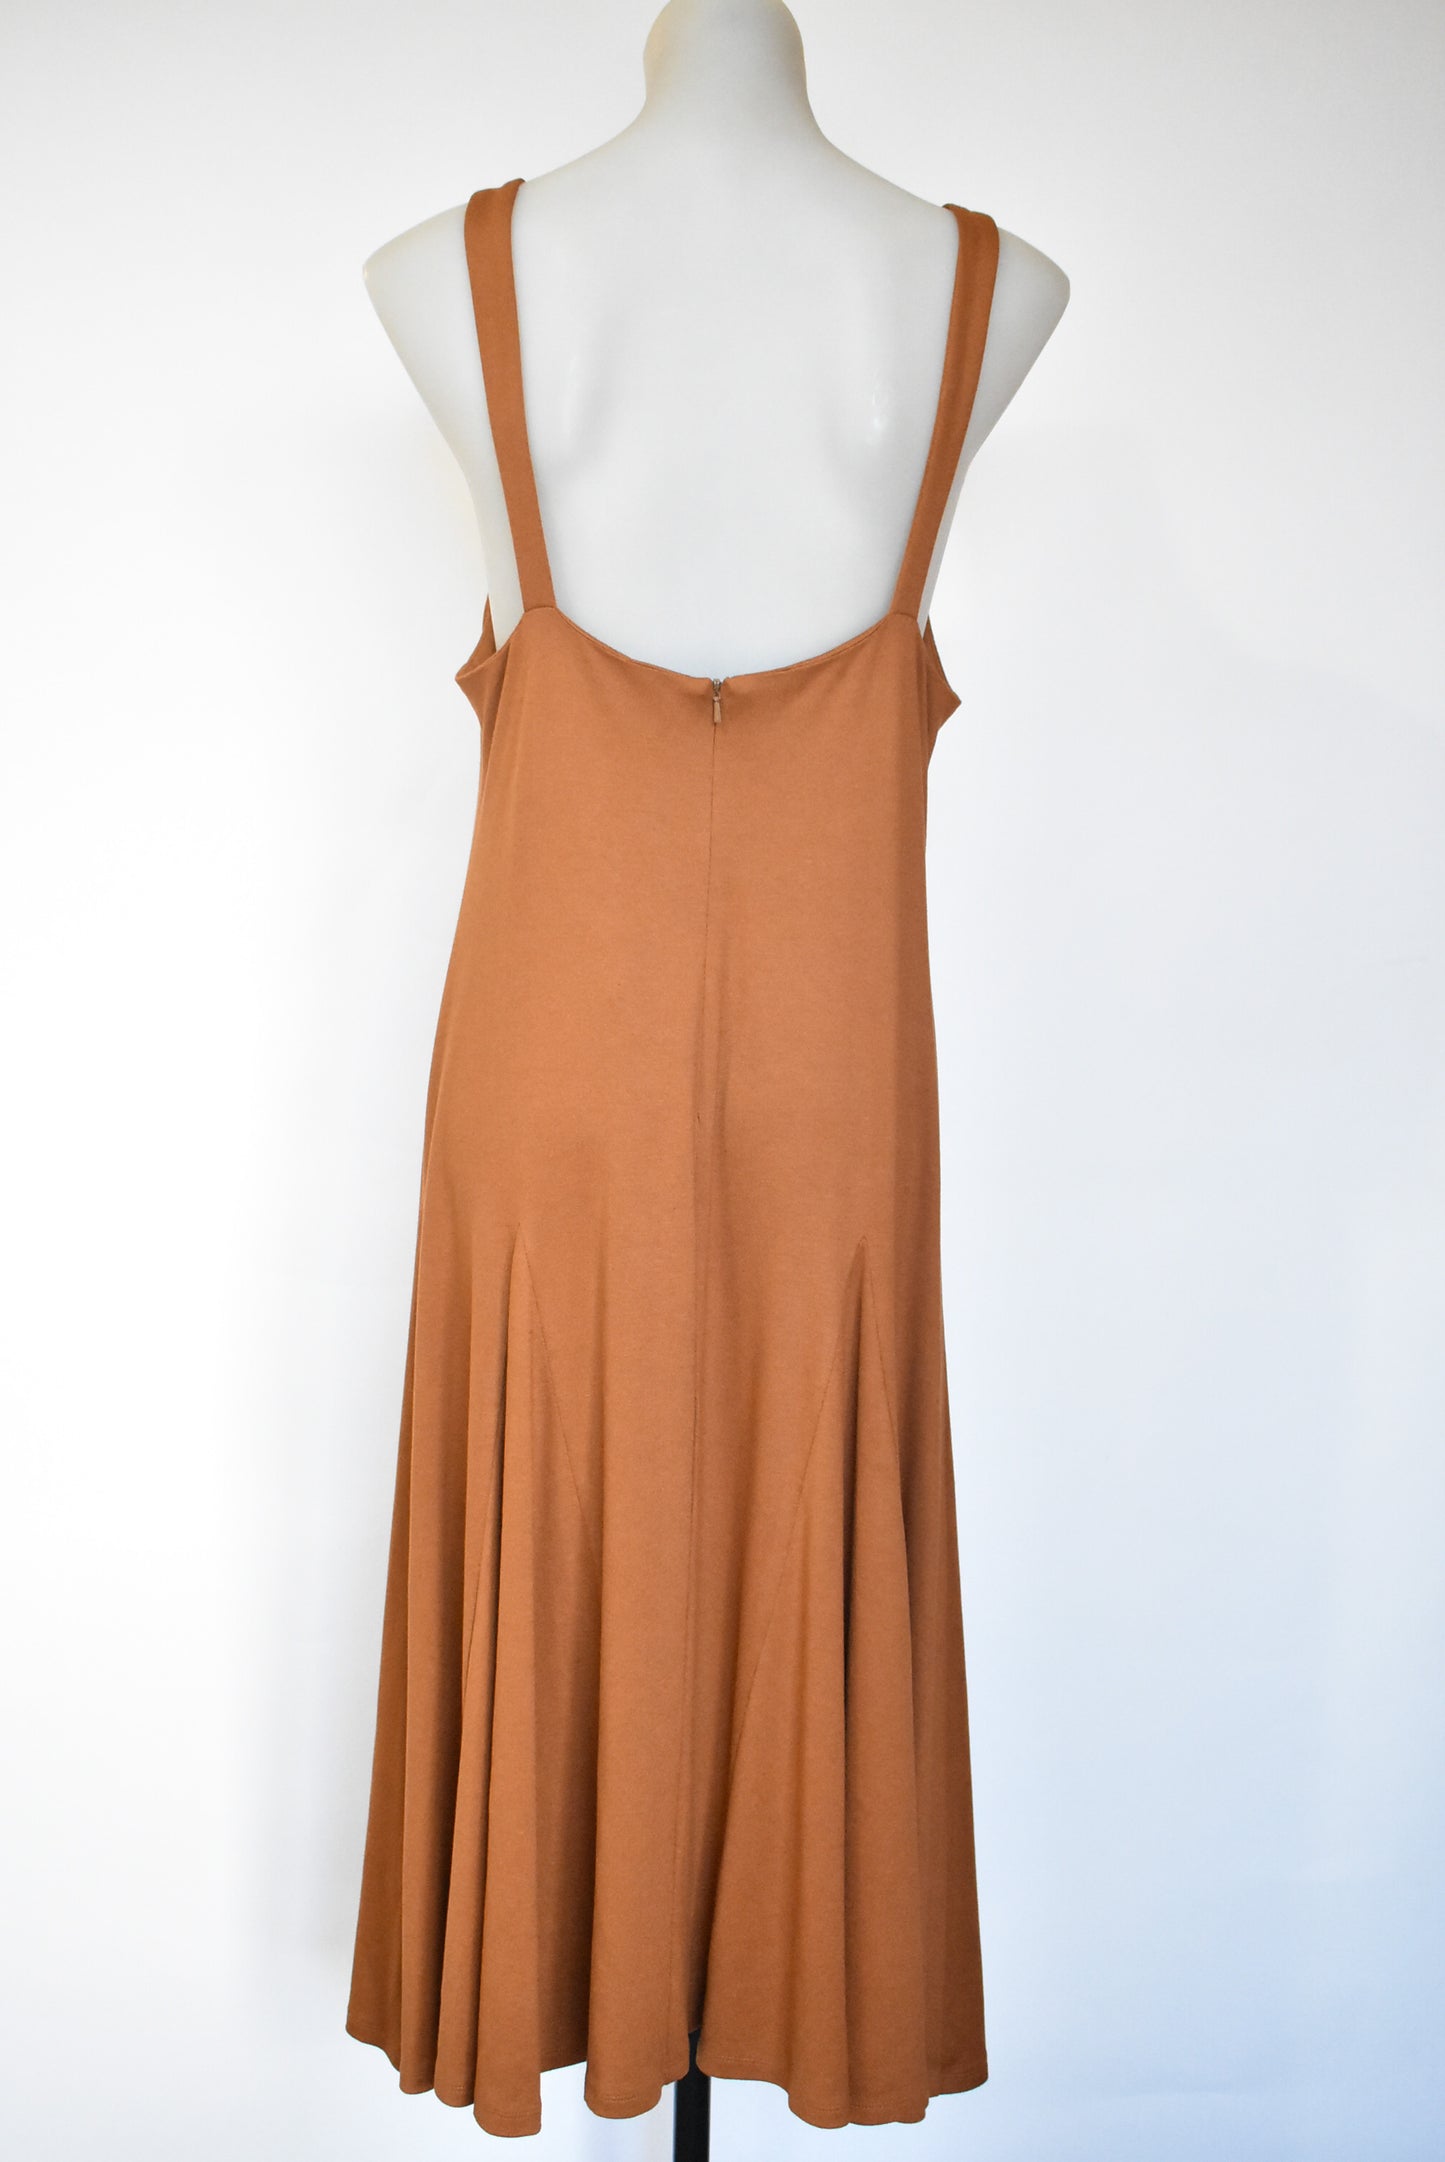 Harman Grubisa marigold dress, modal and silk blend, 10